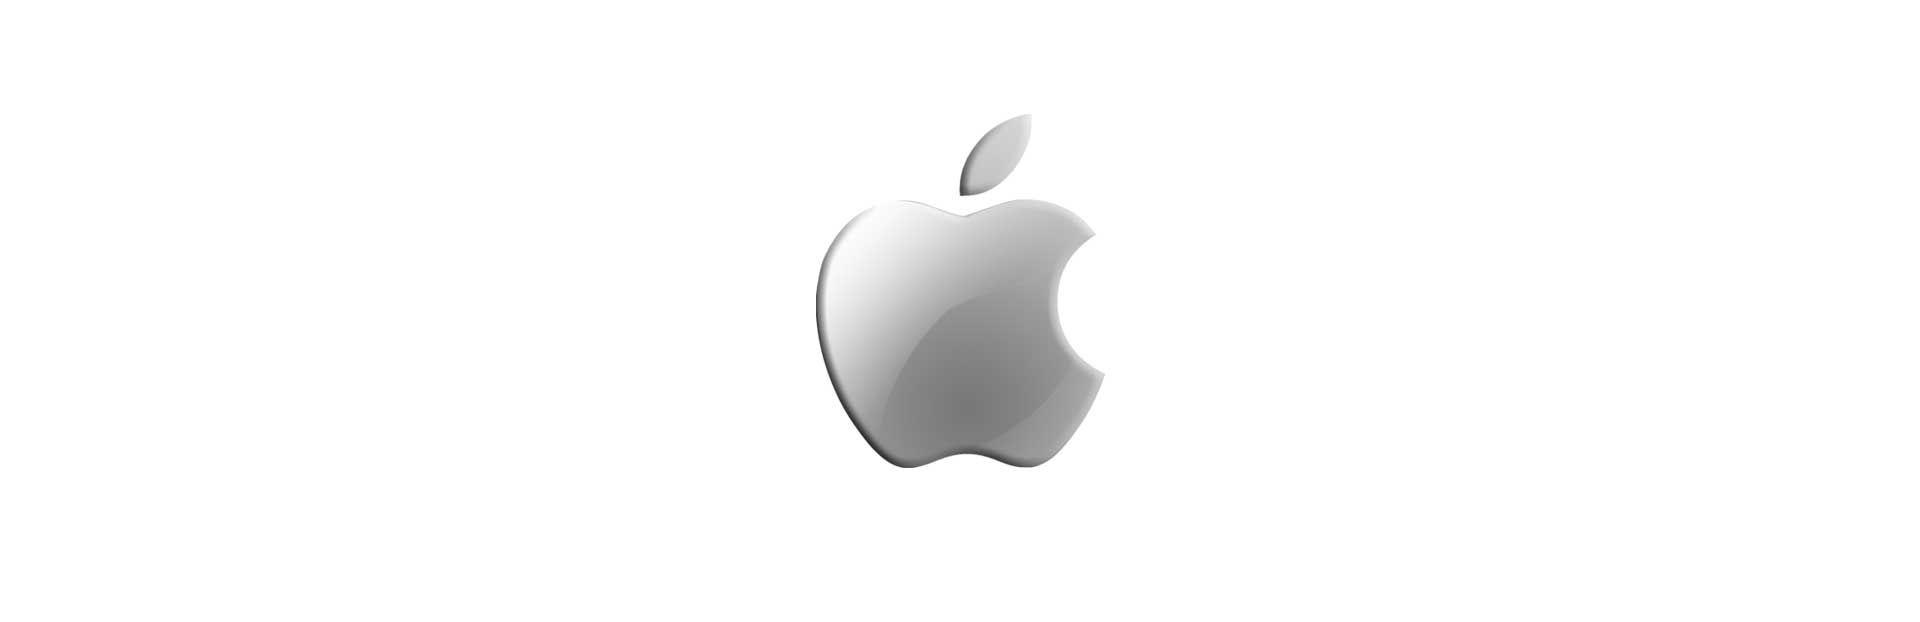 B in Apple Logo - Applelogo B